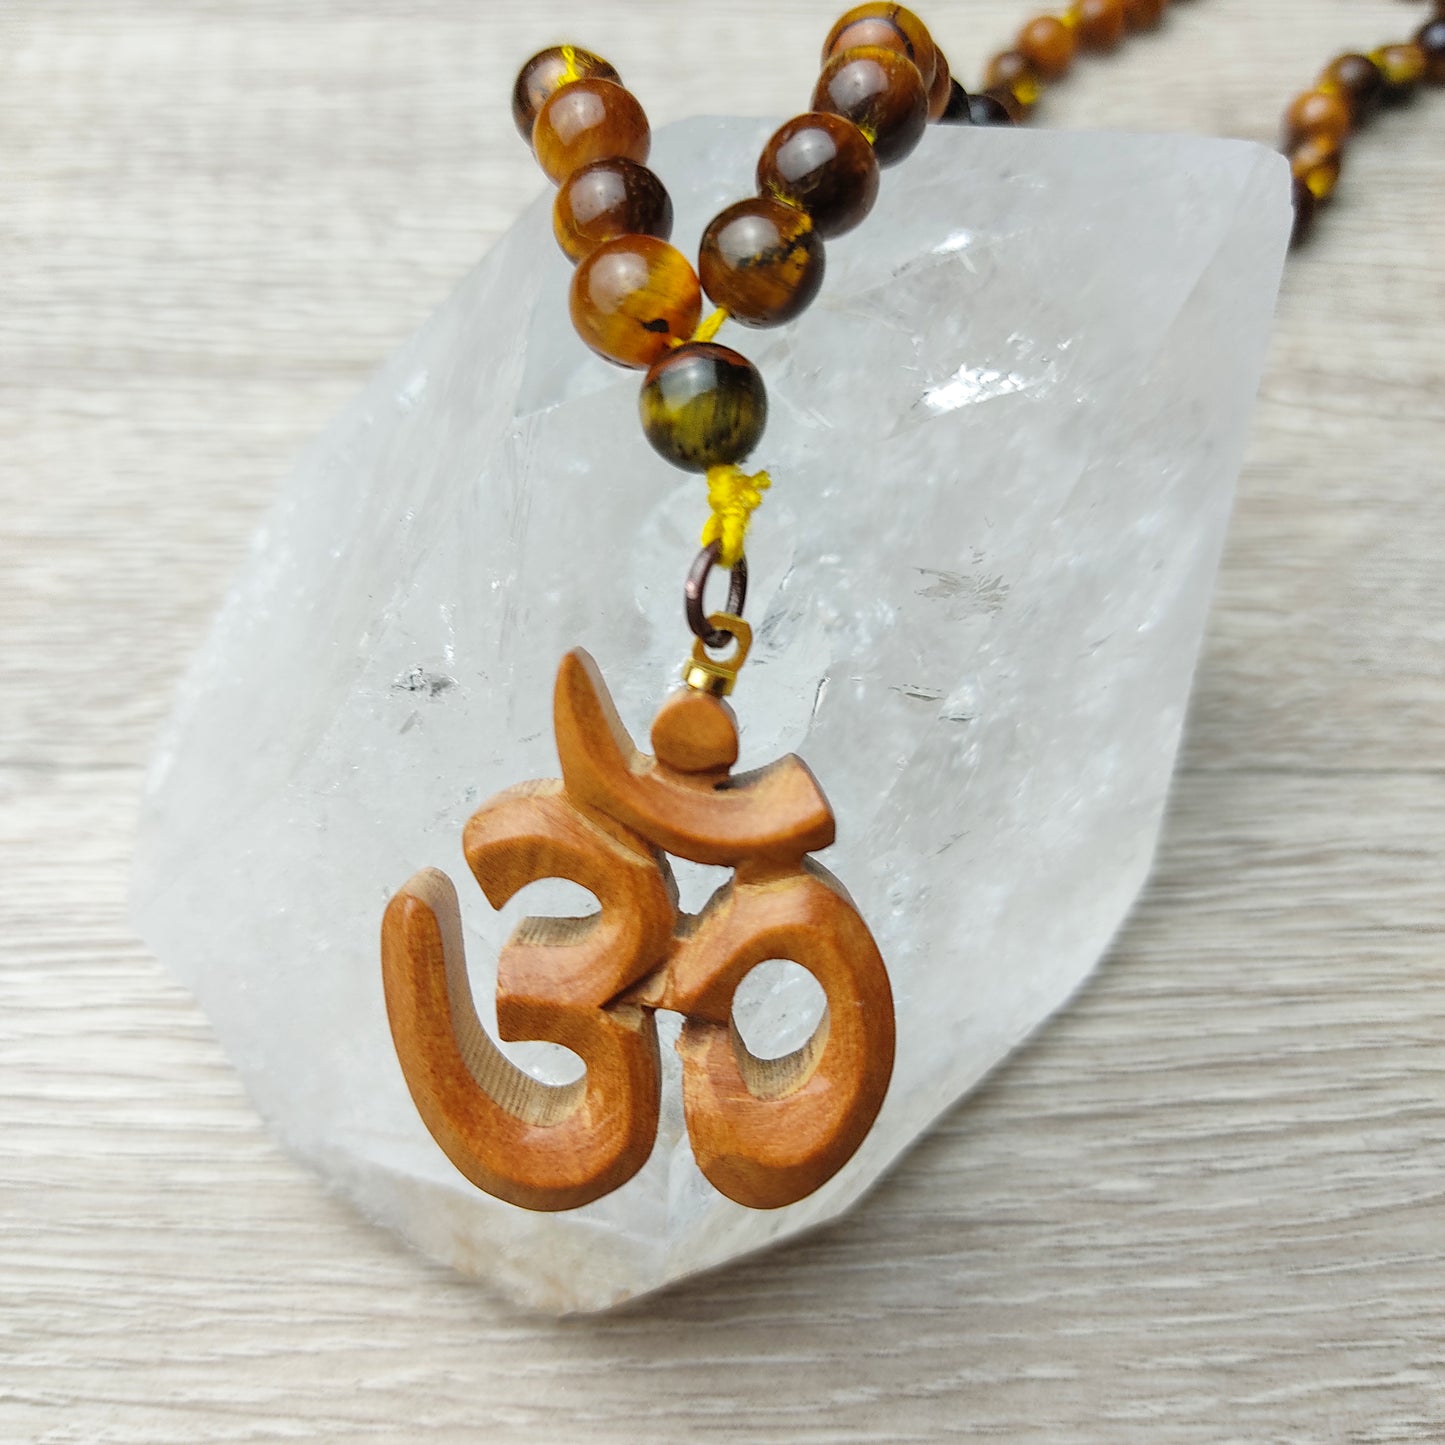 Genuine Tiger Eye Beads Necklace with Sandalwood Om Symbol Pendant Yoga Gift